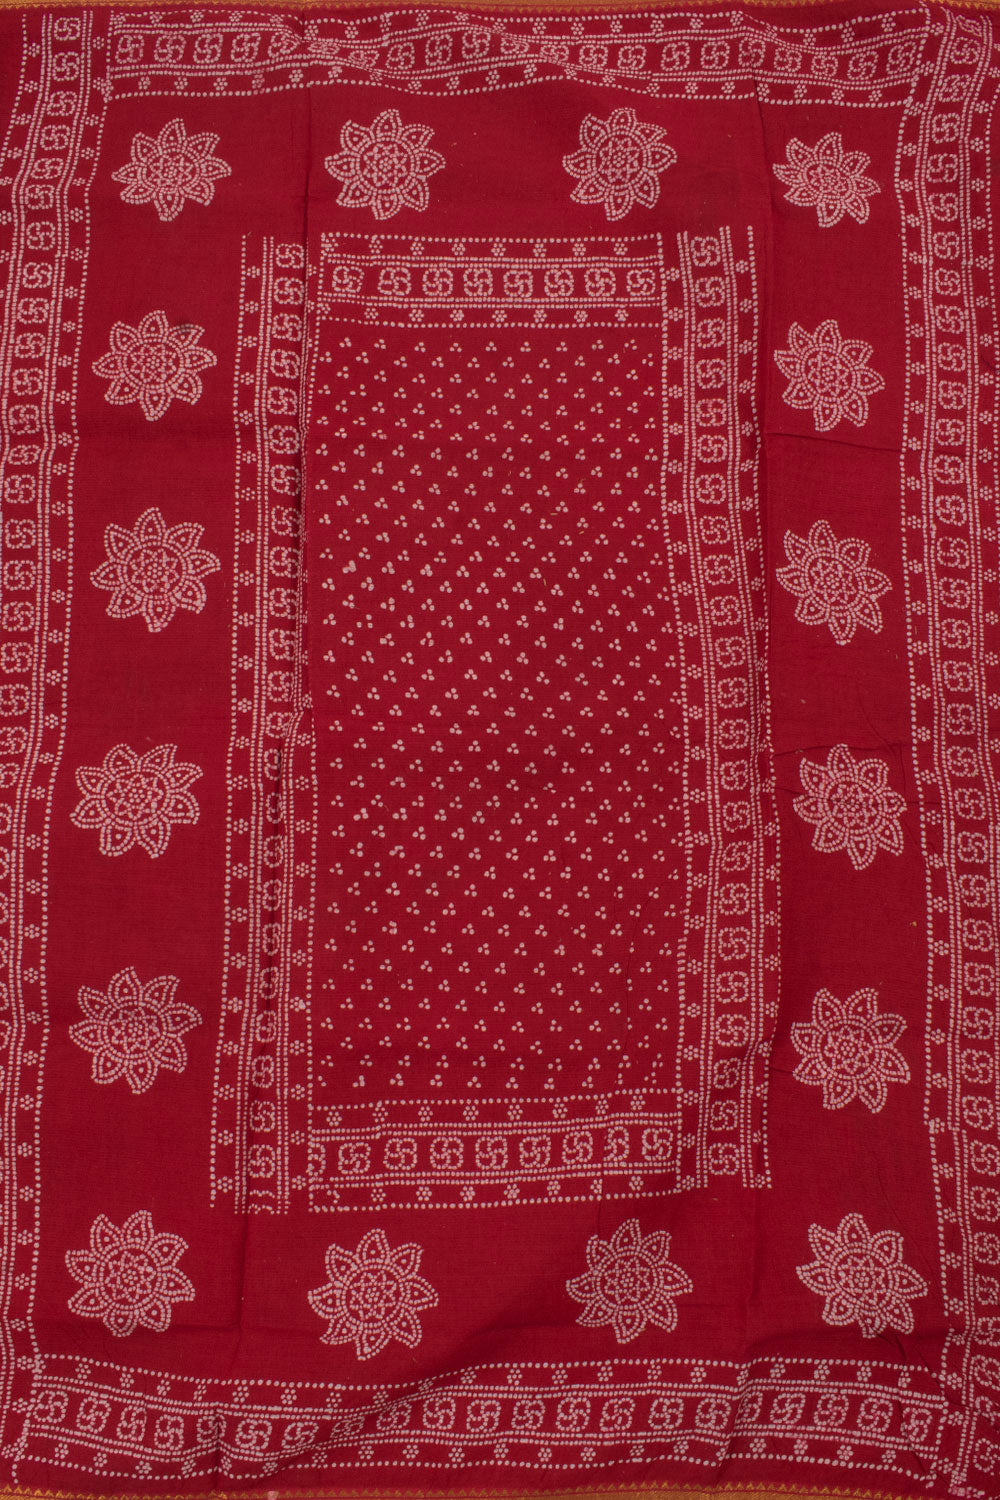 Hand Block Printed Sungudi Cotton Saree 10057749